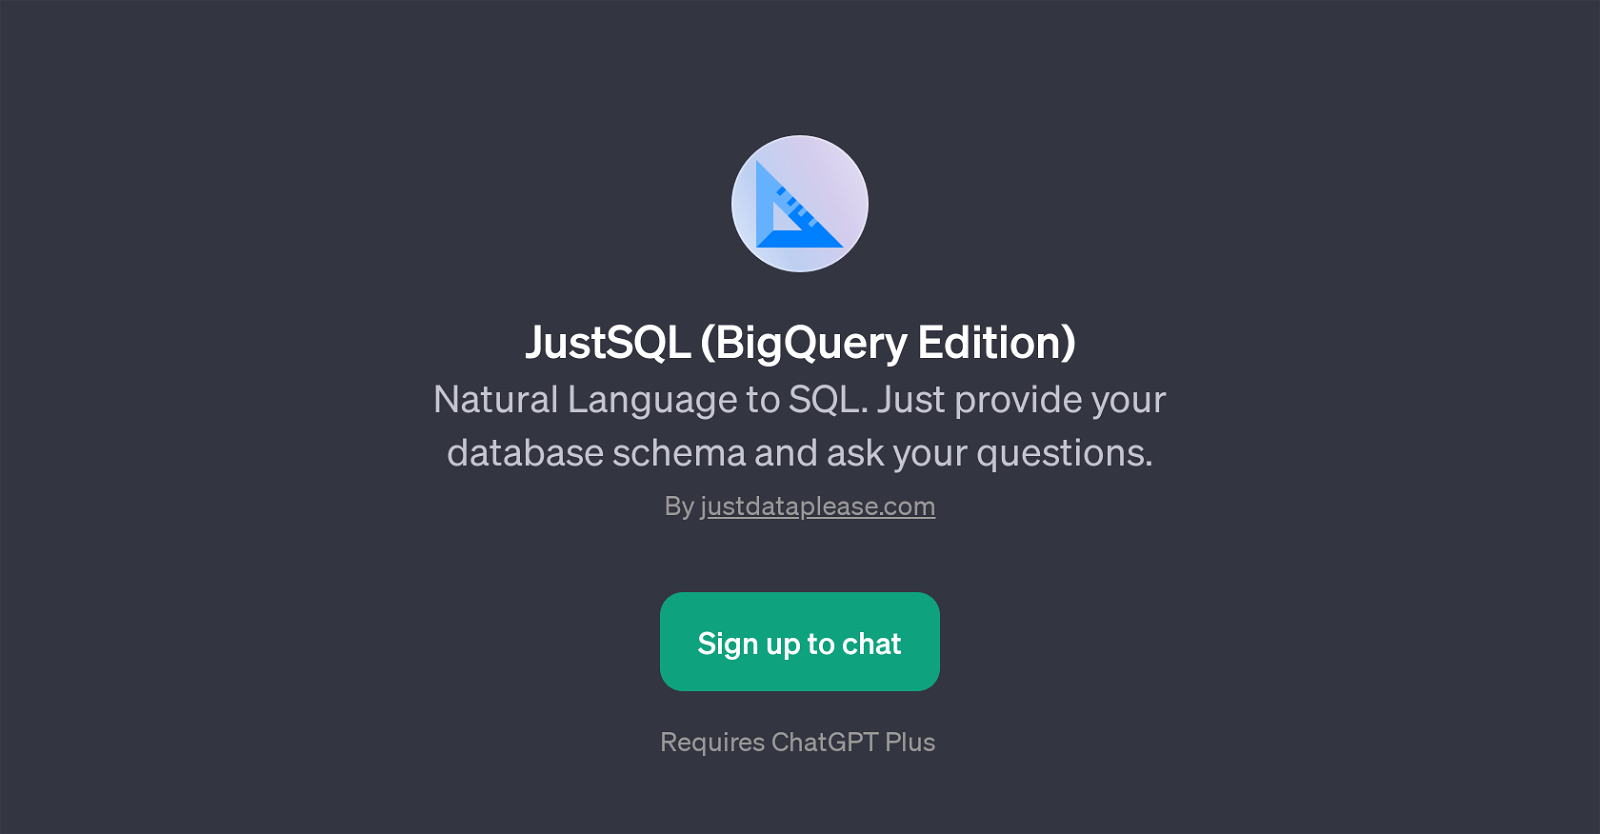 JustSQL (BigQuery Edition) website